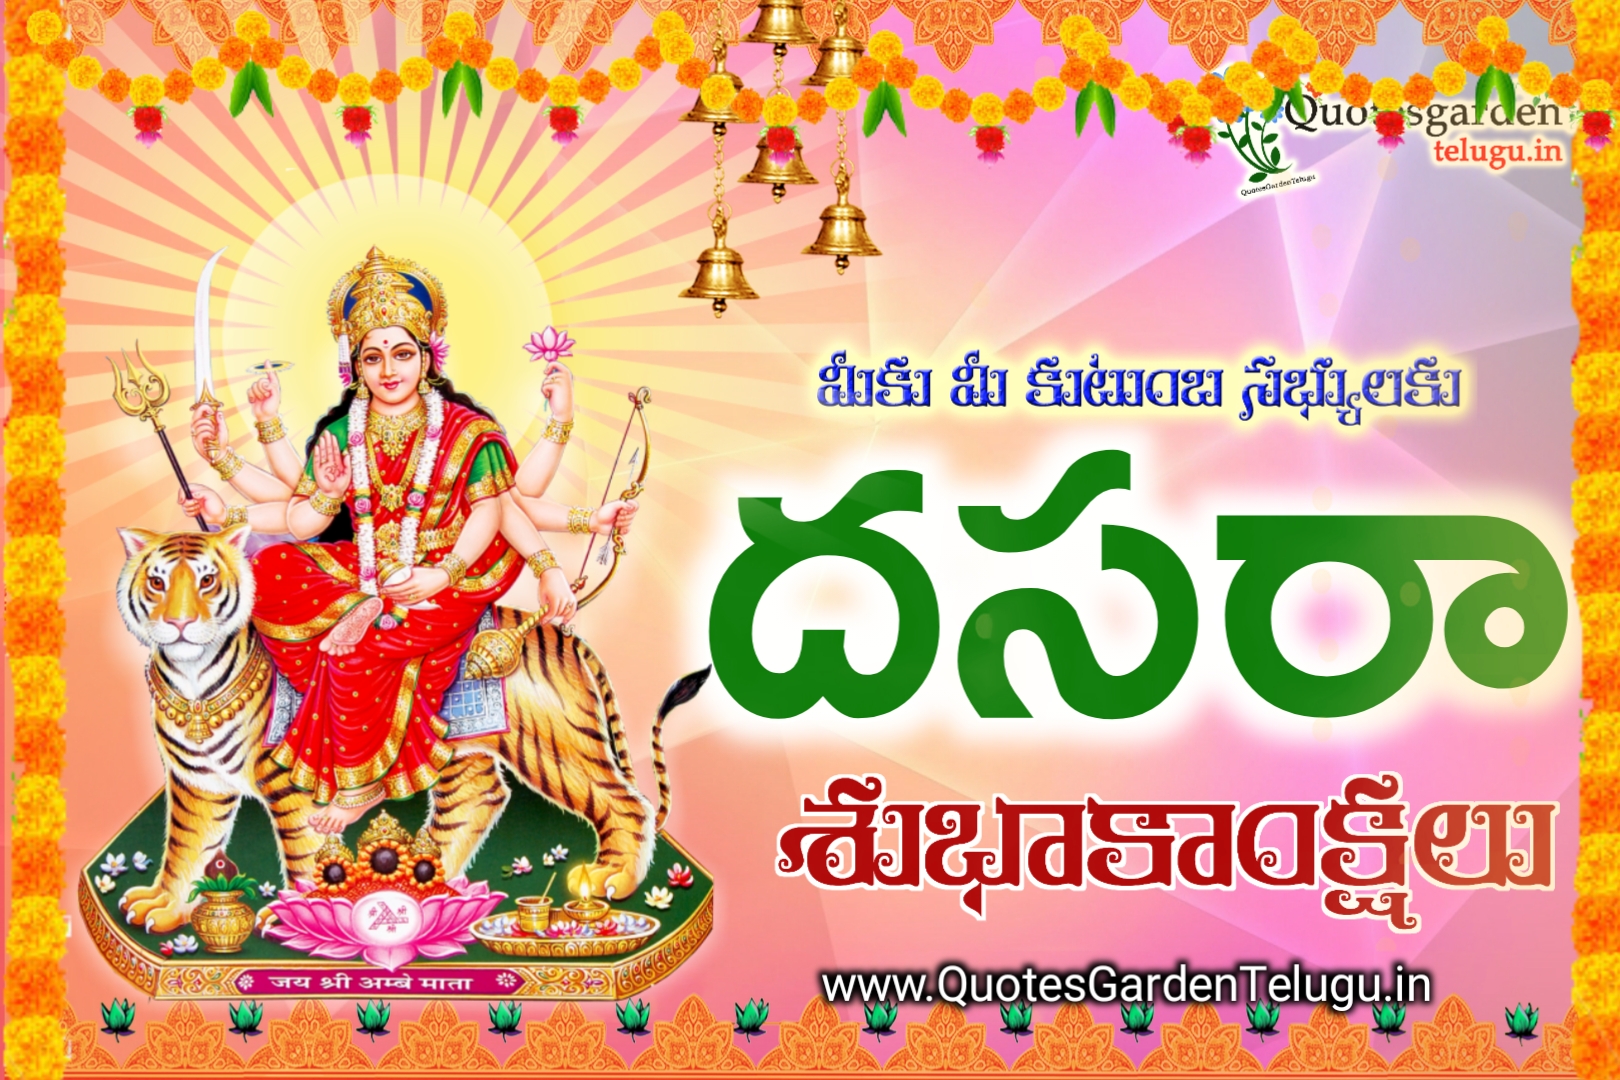 Full 4K Collection of Over 999+ Telugu Dasara Images – Spectacular Assortment of Dasara Images in Telugu